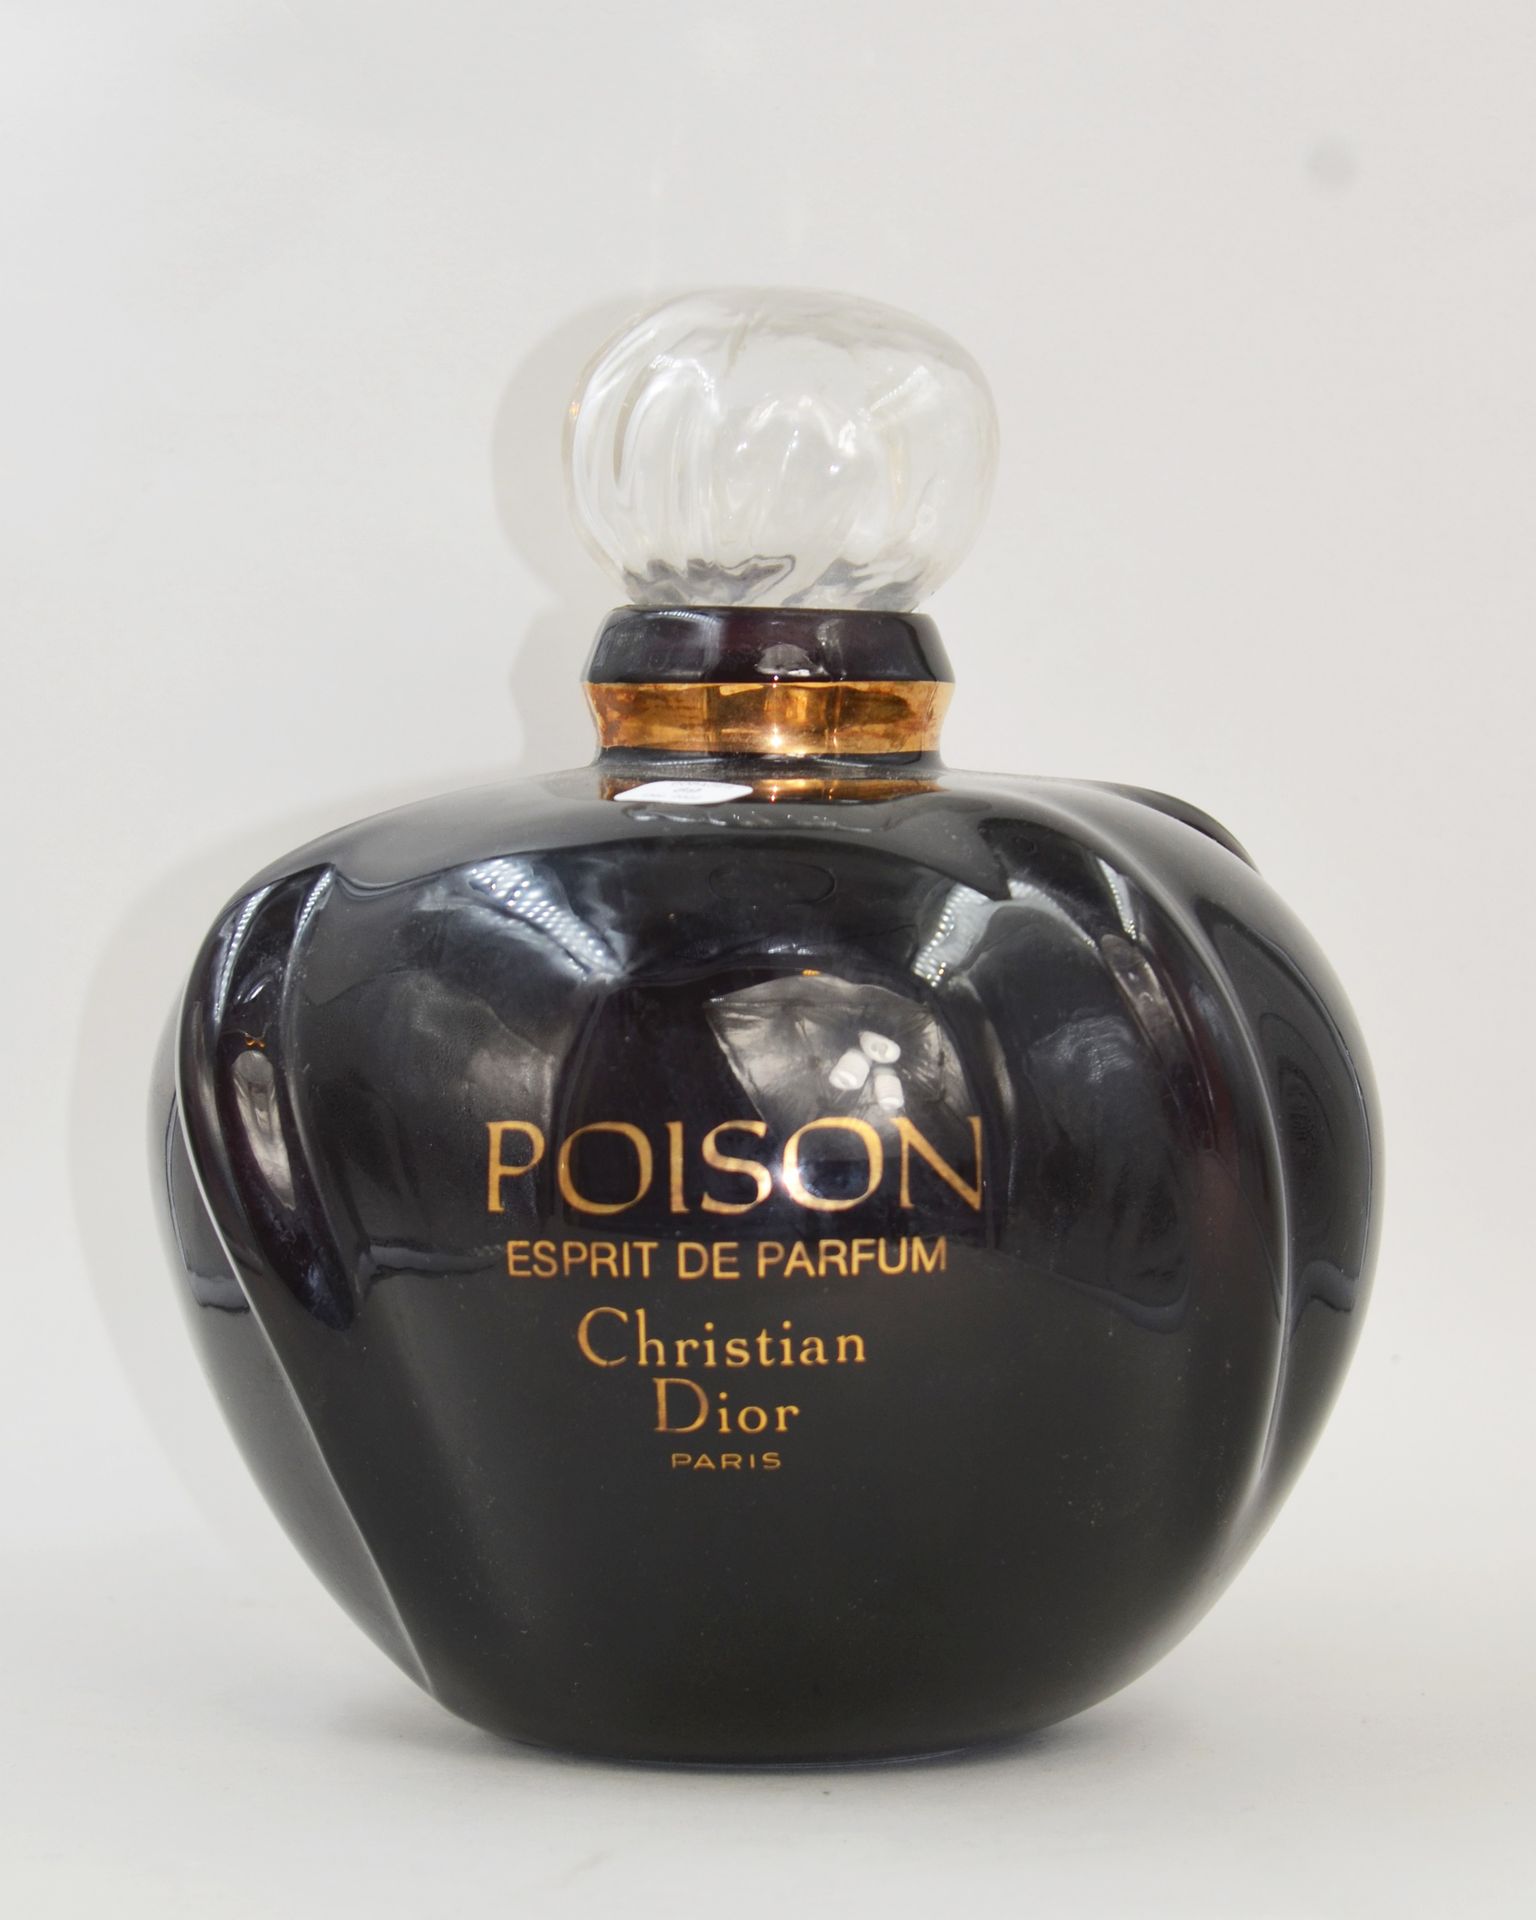 Null CHRISTIAN DIOR "Poison esprit de parfum".

Dekorative Flakonattrappe aus vi&hellip;